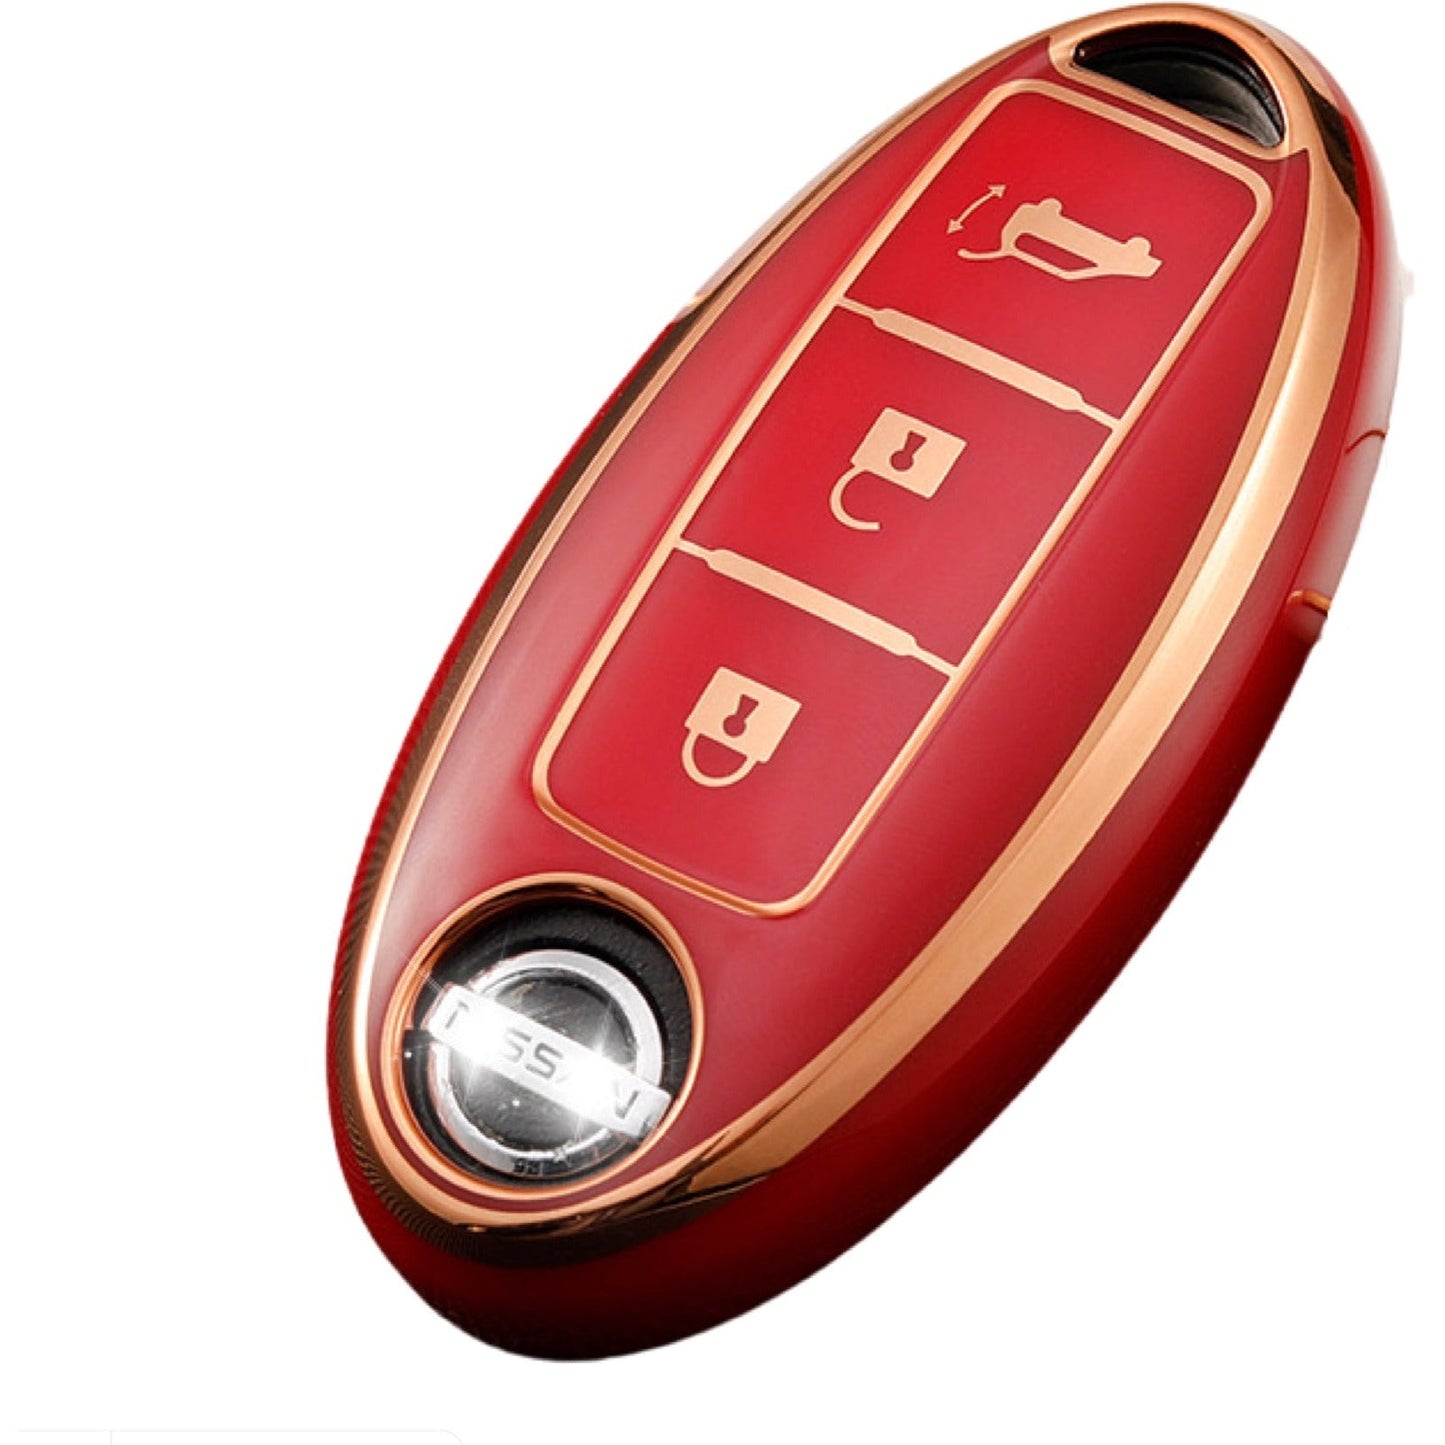 Nissan Car Key Cover red | Qashqai, X-Trail key fob cover | Nissan Accessories - Keysleeves